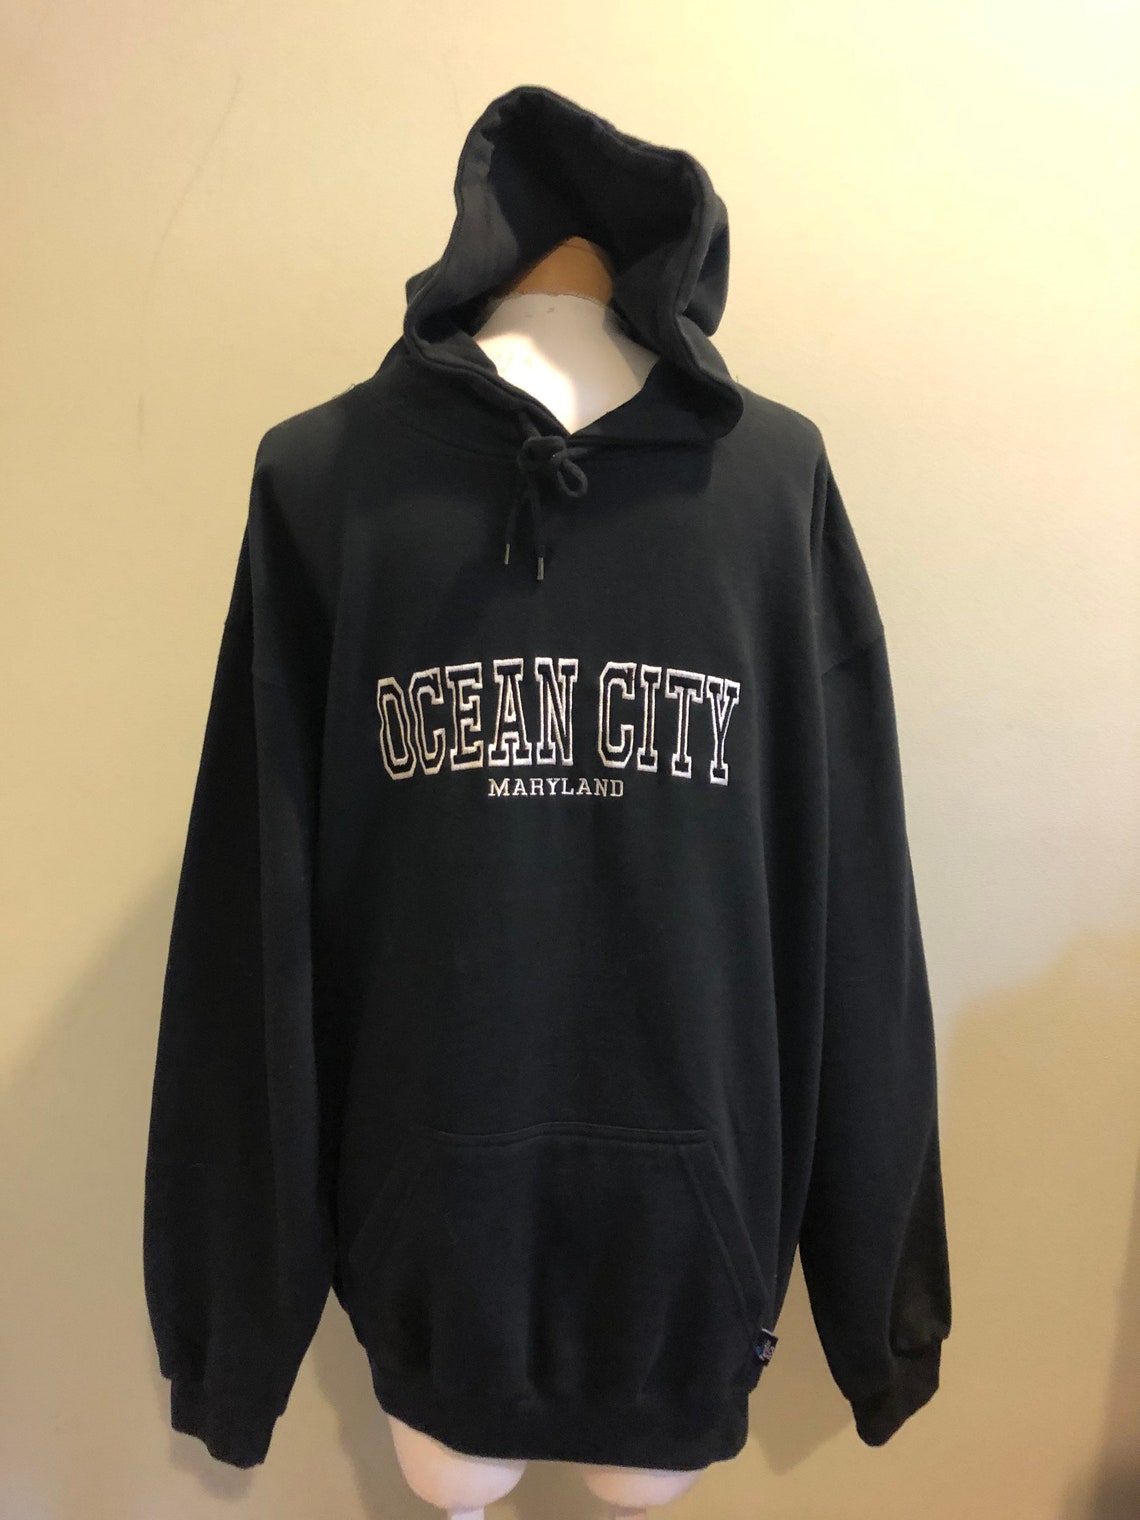 Vintage Ocean City Maryland Sweatshirt | Etsy